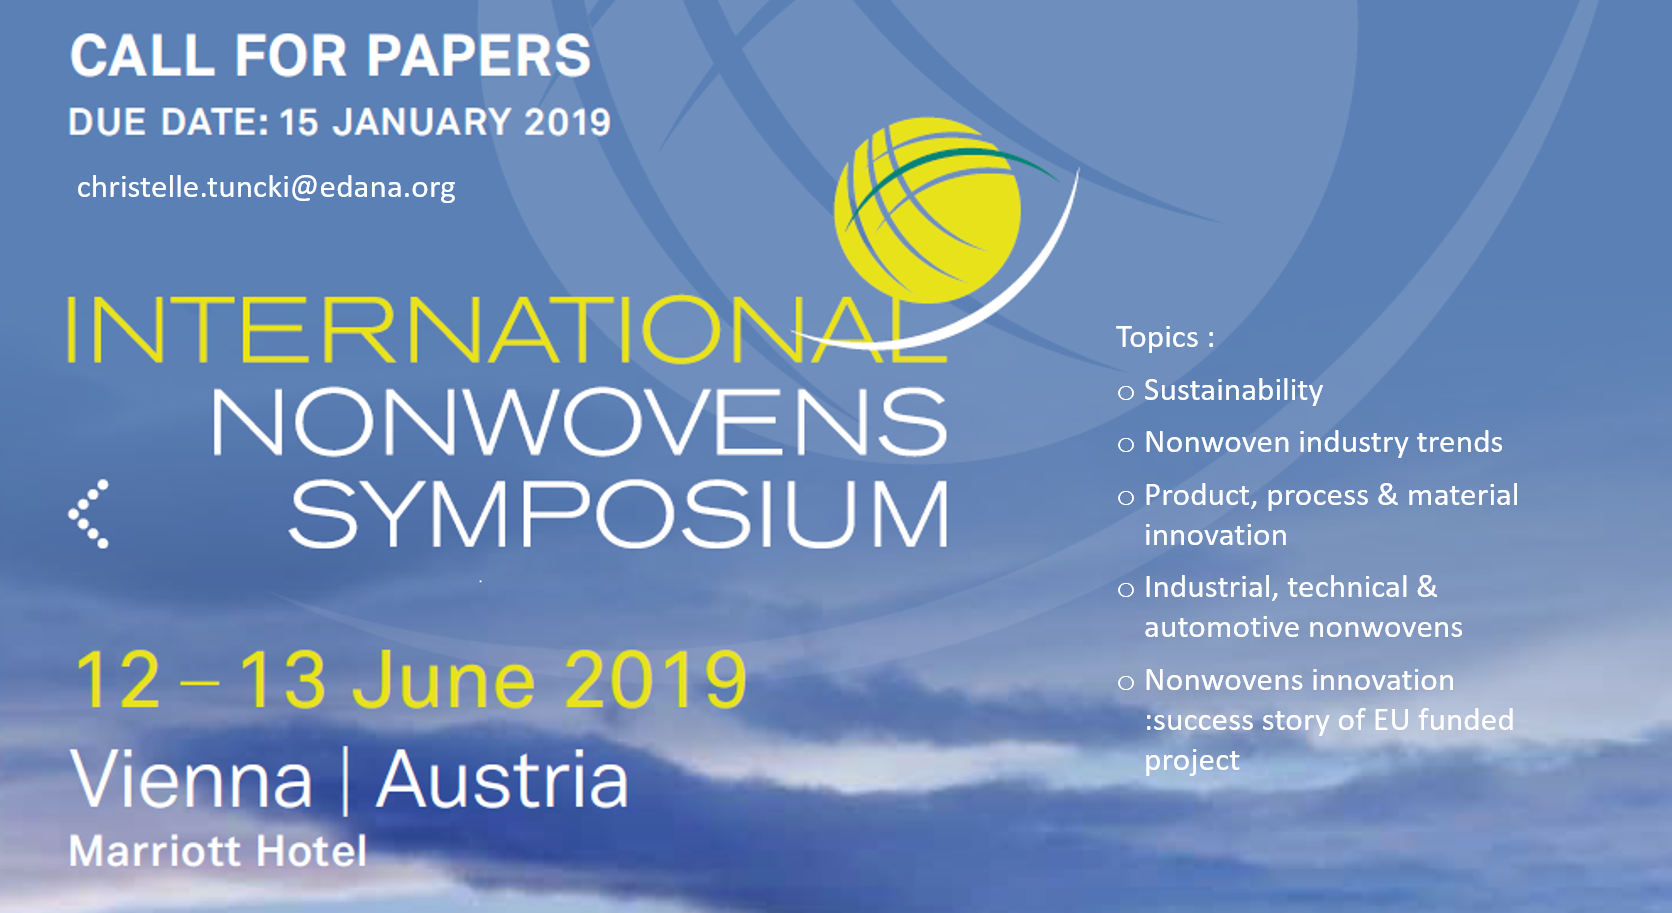 EDANA's International Nonwovens Symposium offers presentations about latest industry developments.